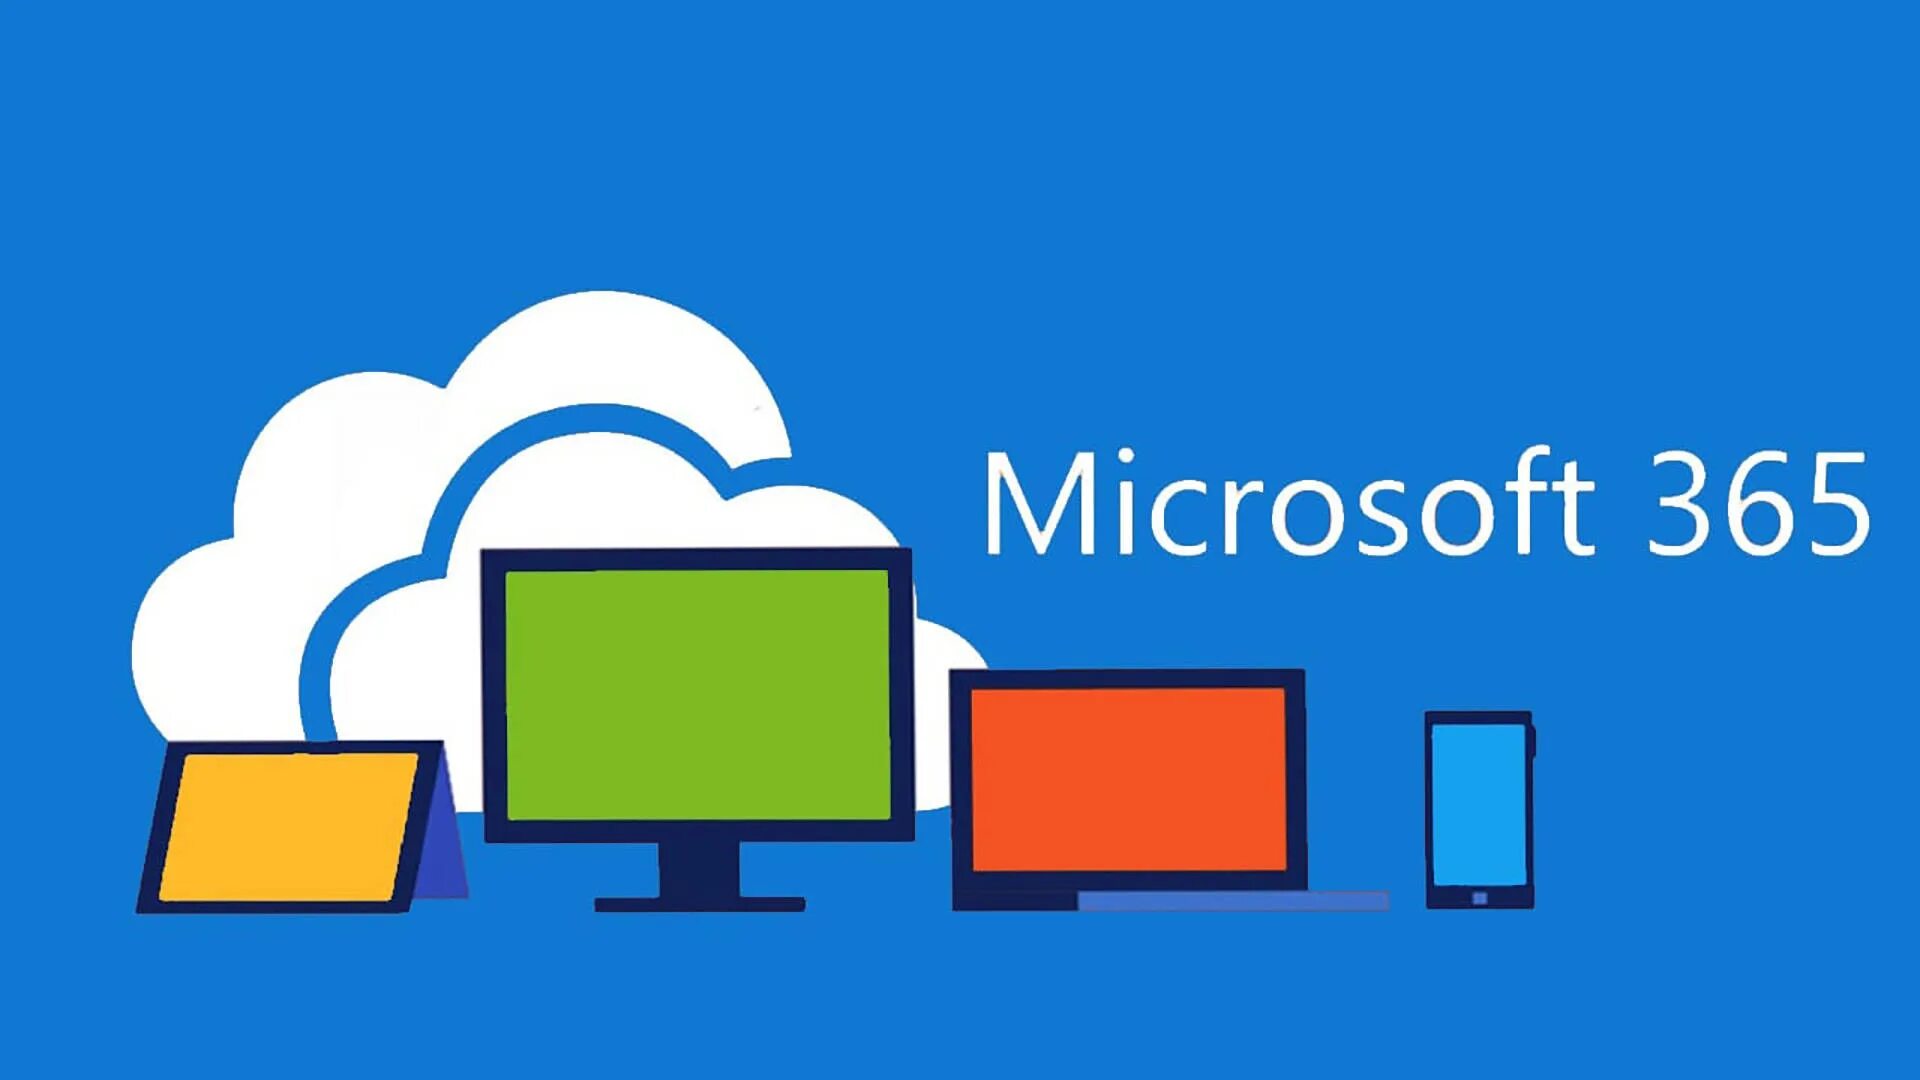 Microsoft 365. MS Office 365. Microsoft Office 365 логотип. Maekrosovt 365.